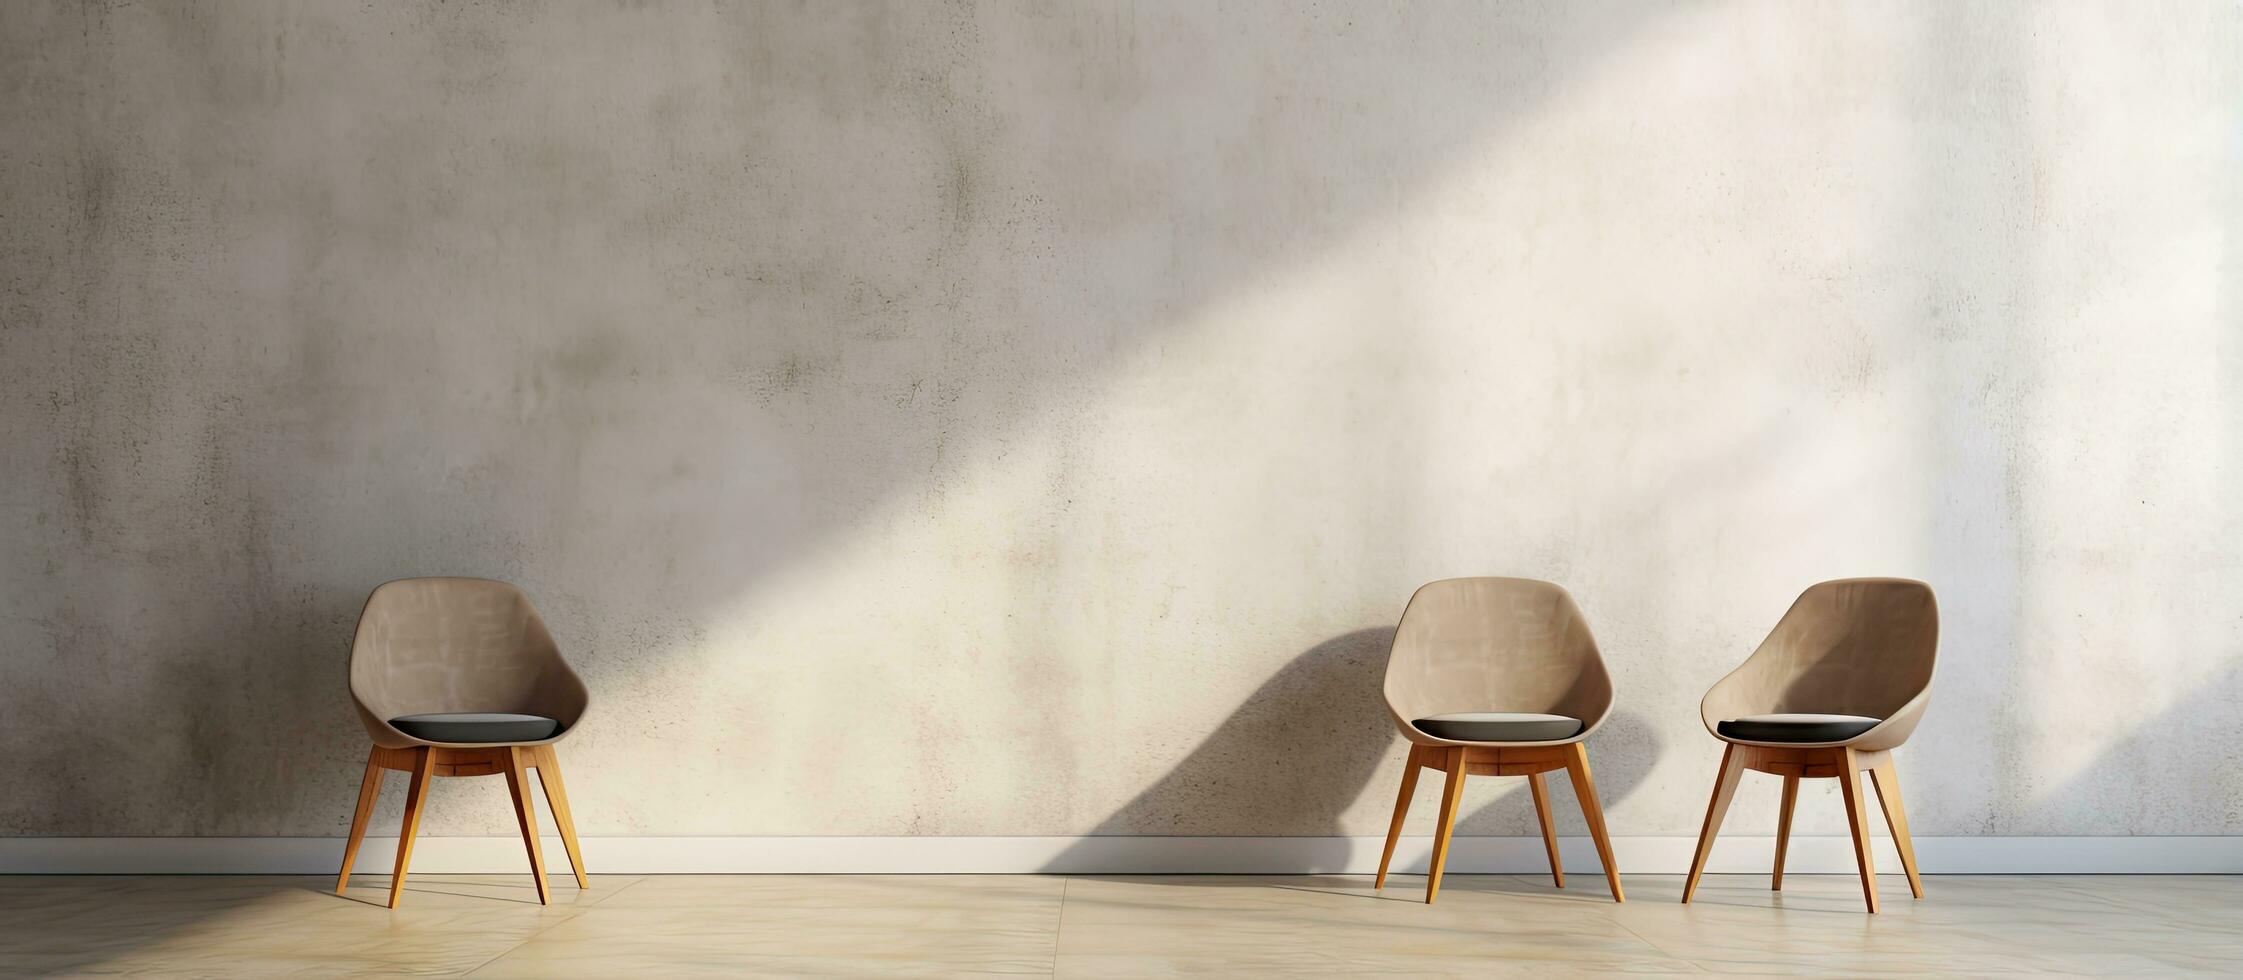 stoel en houten verdieping in beton interieur met twee blanco muren ing foto